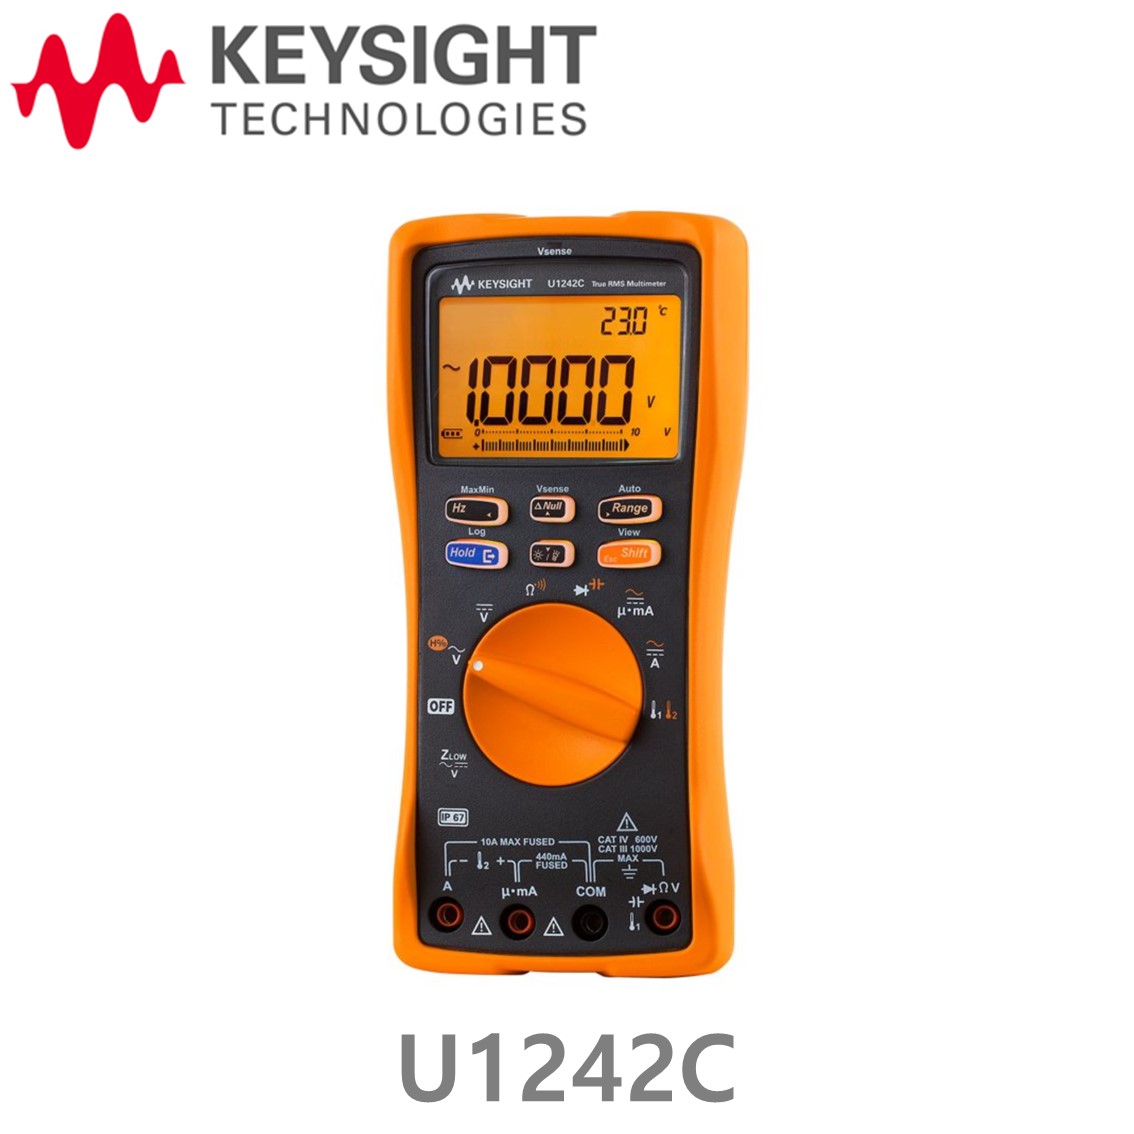 [ KEYSIGHT U1242C ] 키사이트 4디지트 핸드형 디지털 멀티미터, 방수,방진 IP67